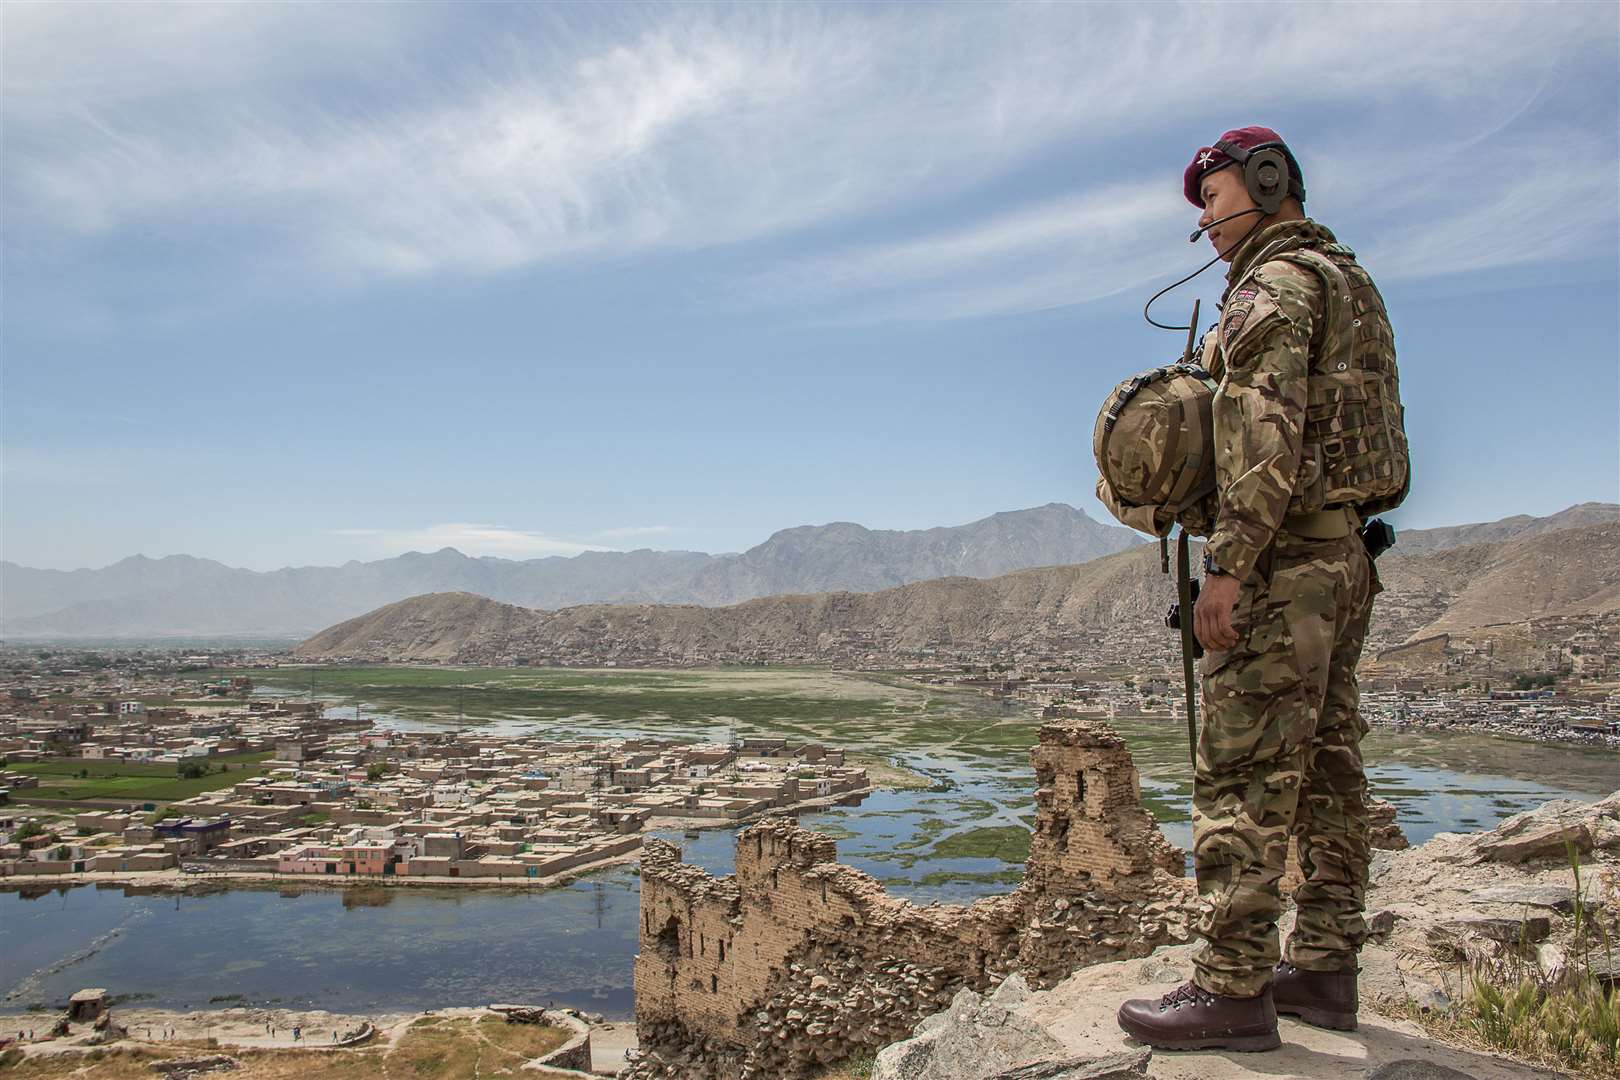 Gurkhas from Shorncliffe in Folkestone on tour in Afghanistan 2016. Credit: British Army/Royal Gurkha Rifles